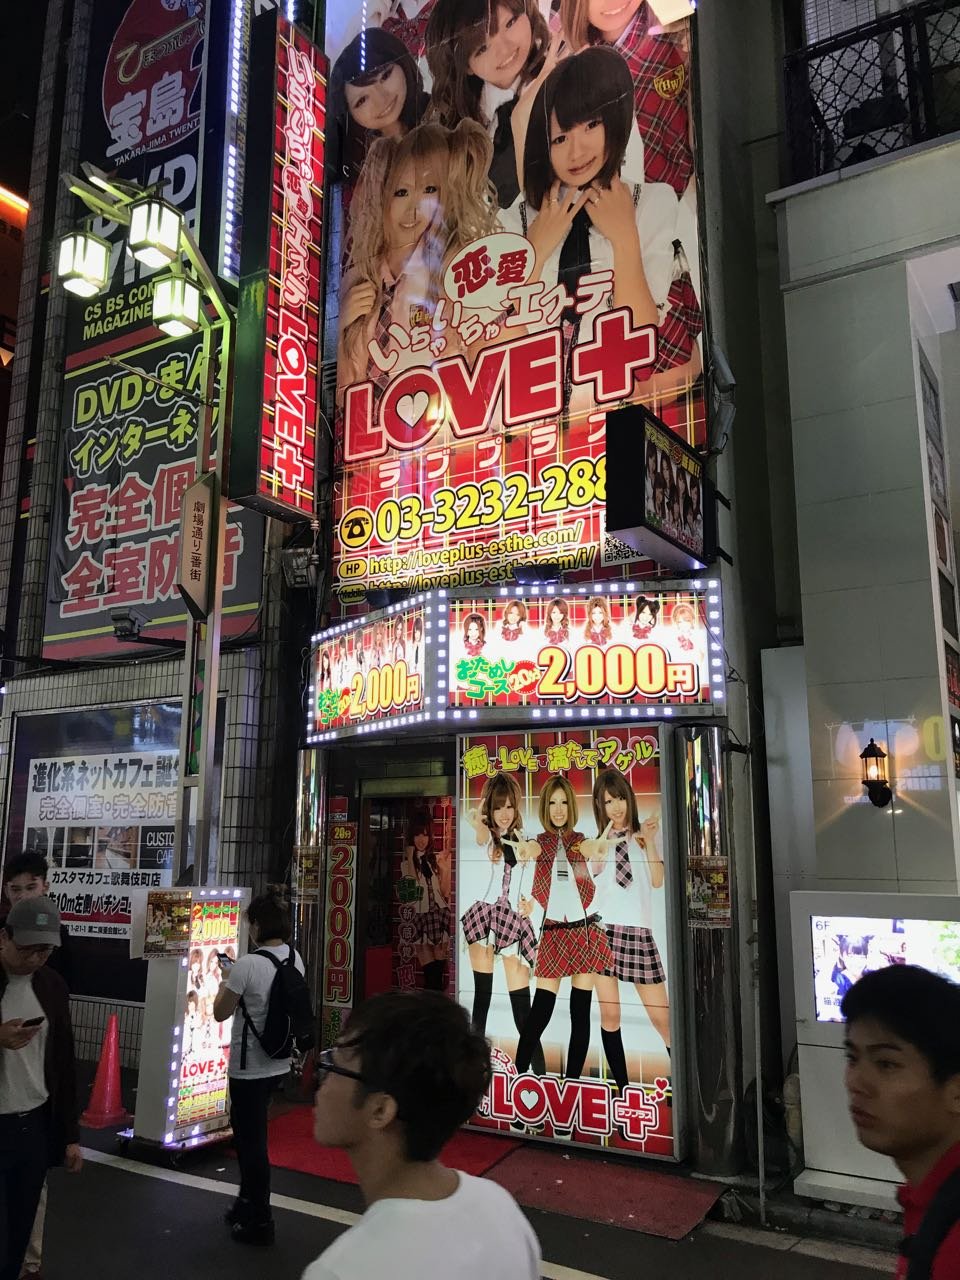 Sex body in Tokyo